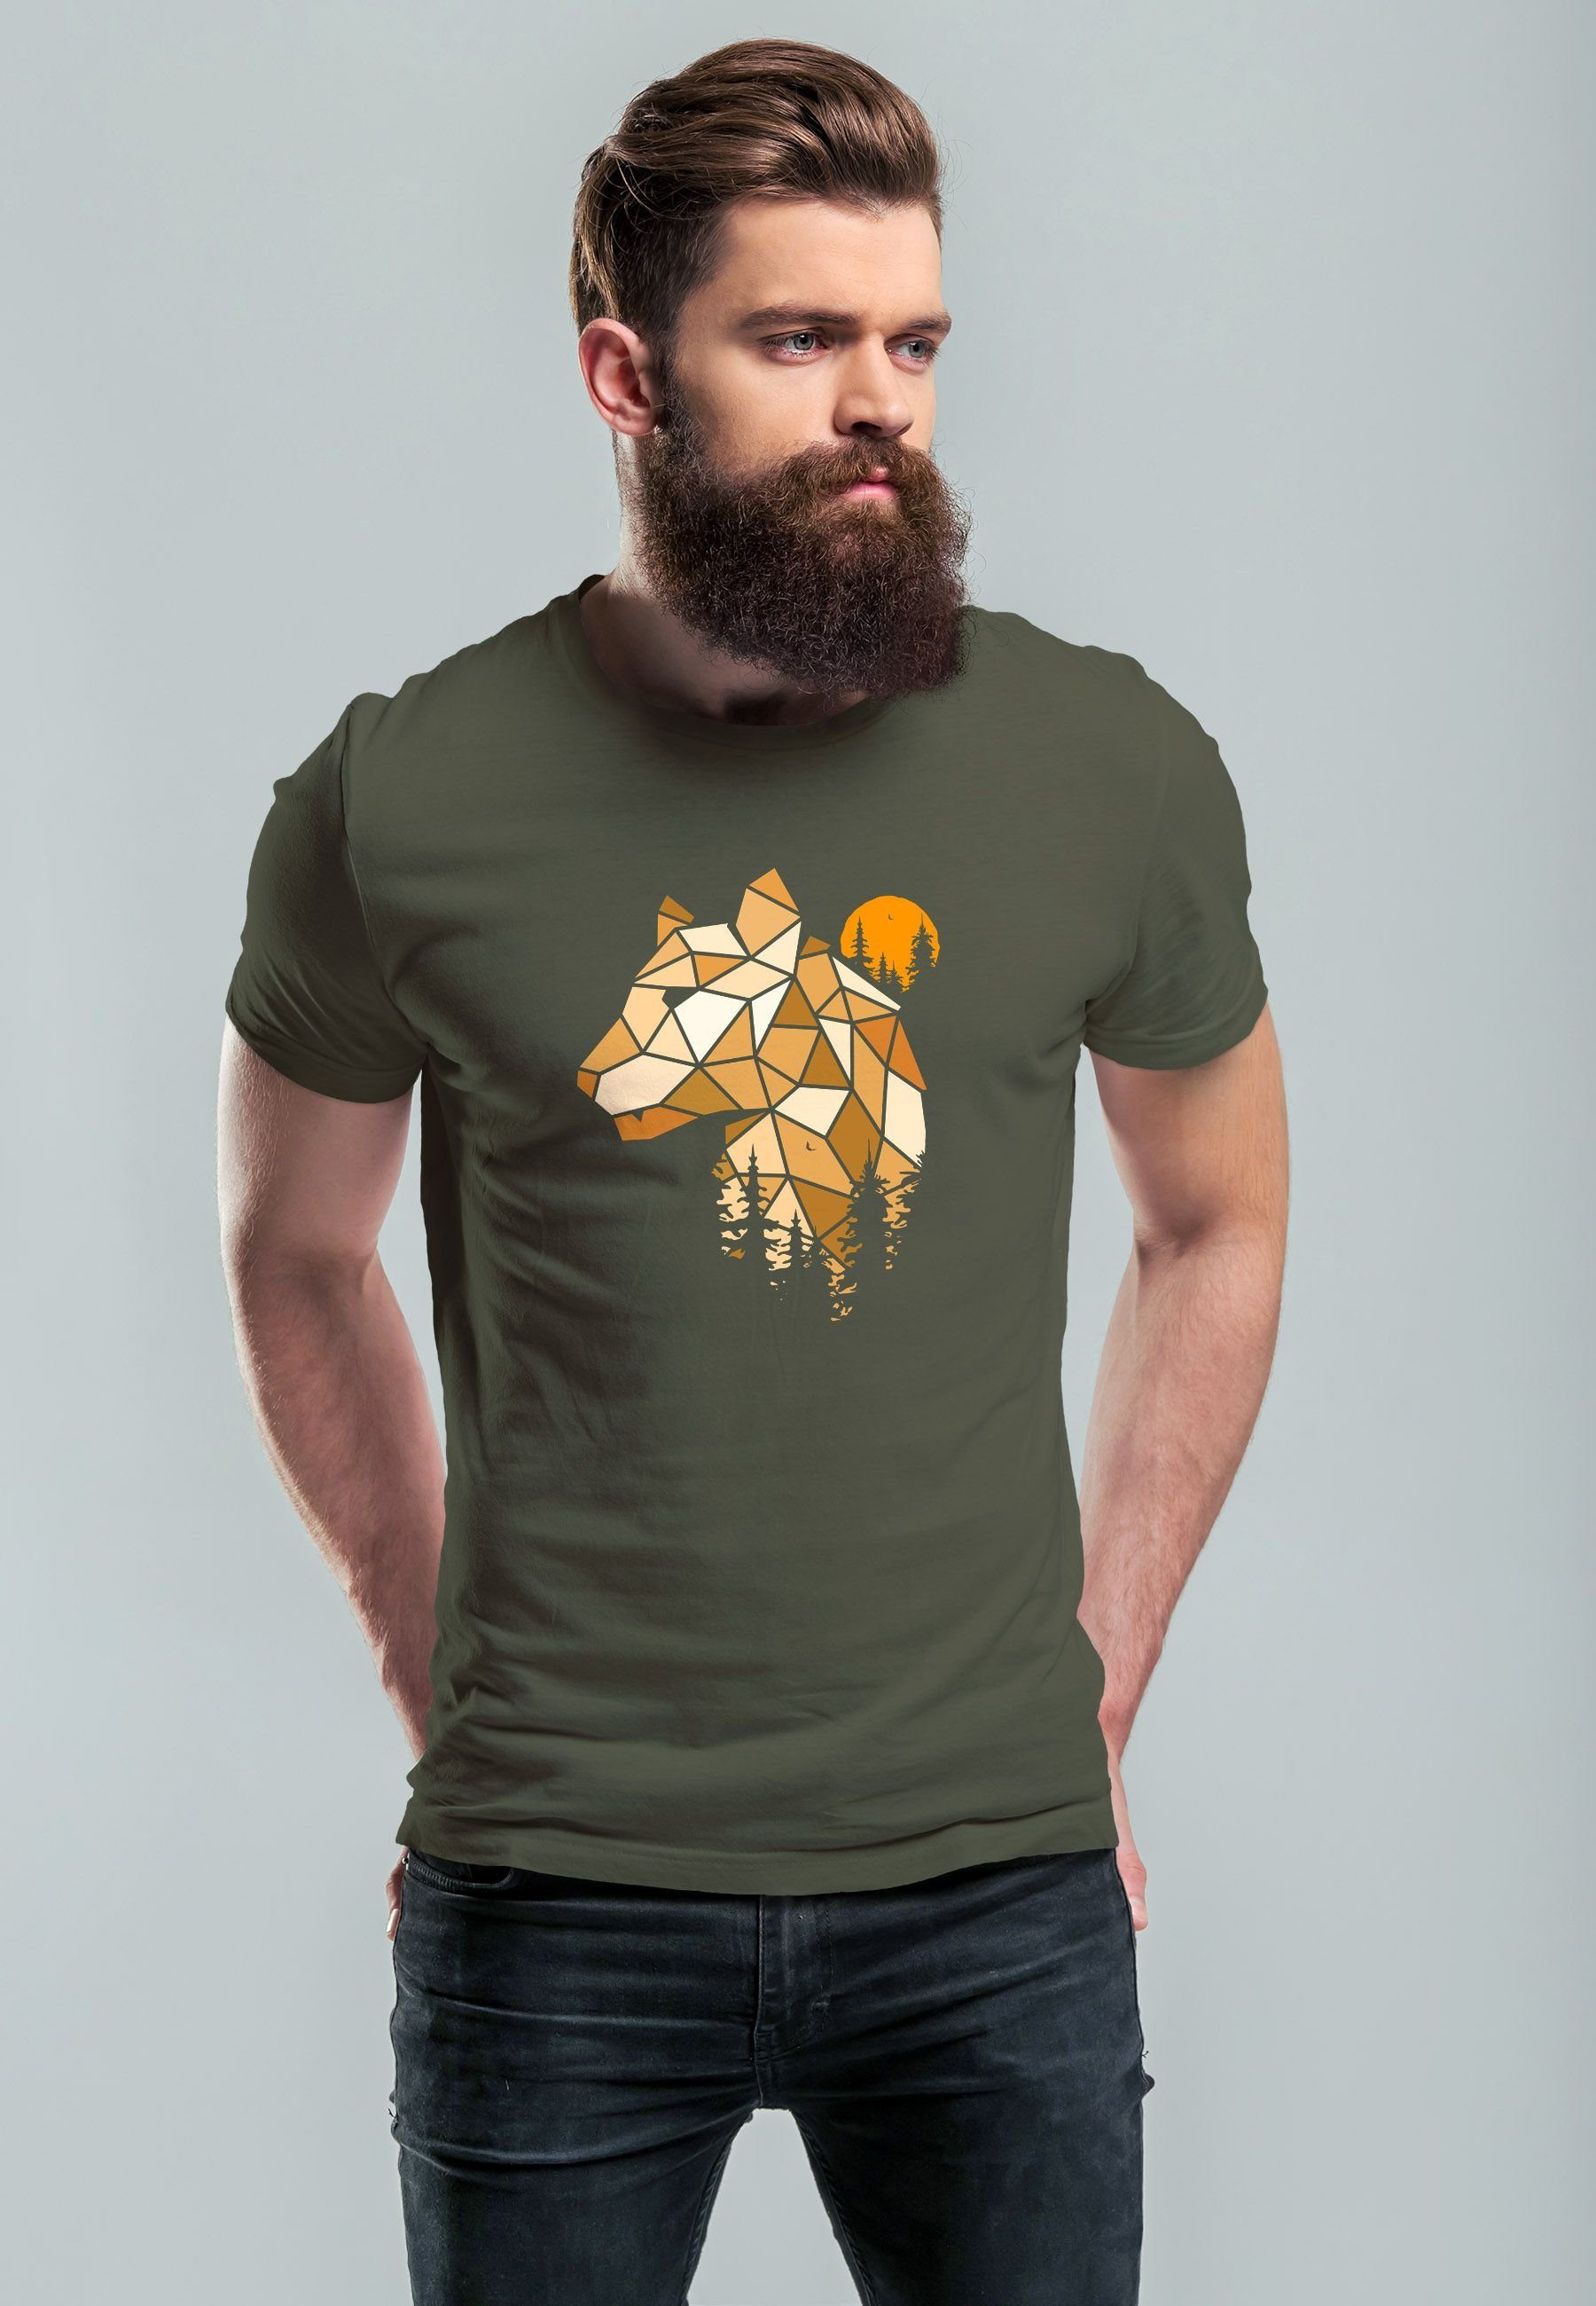 Outdoor Print mit Herren T-Shirt Wald Tiere Motiv Au Print Polygon Luchs Fashion Print-Shirt army Neverless